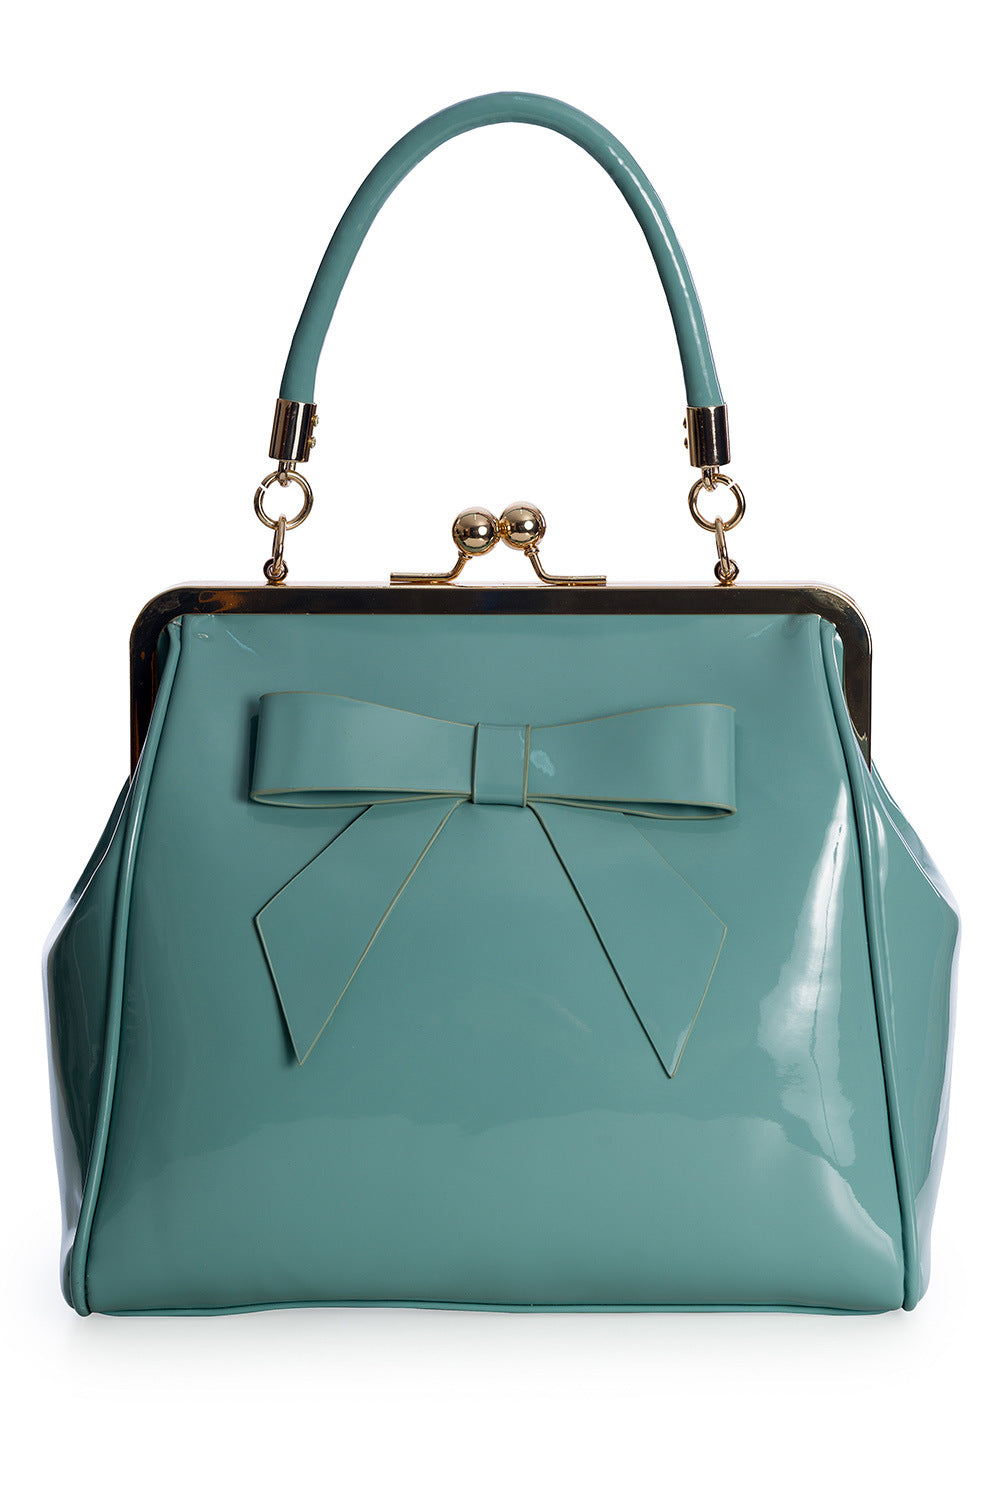 American Vintage Handbag: Turquoise